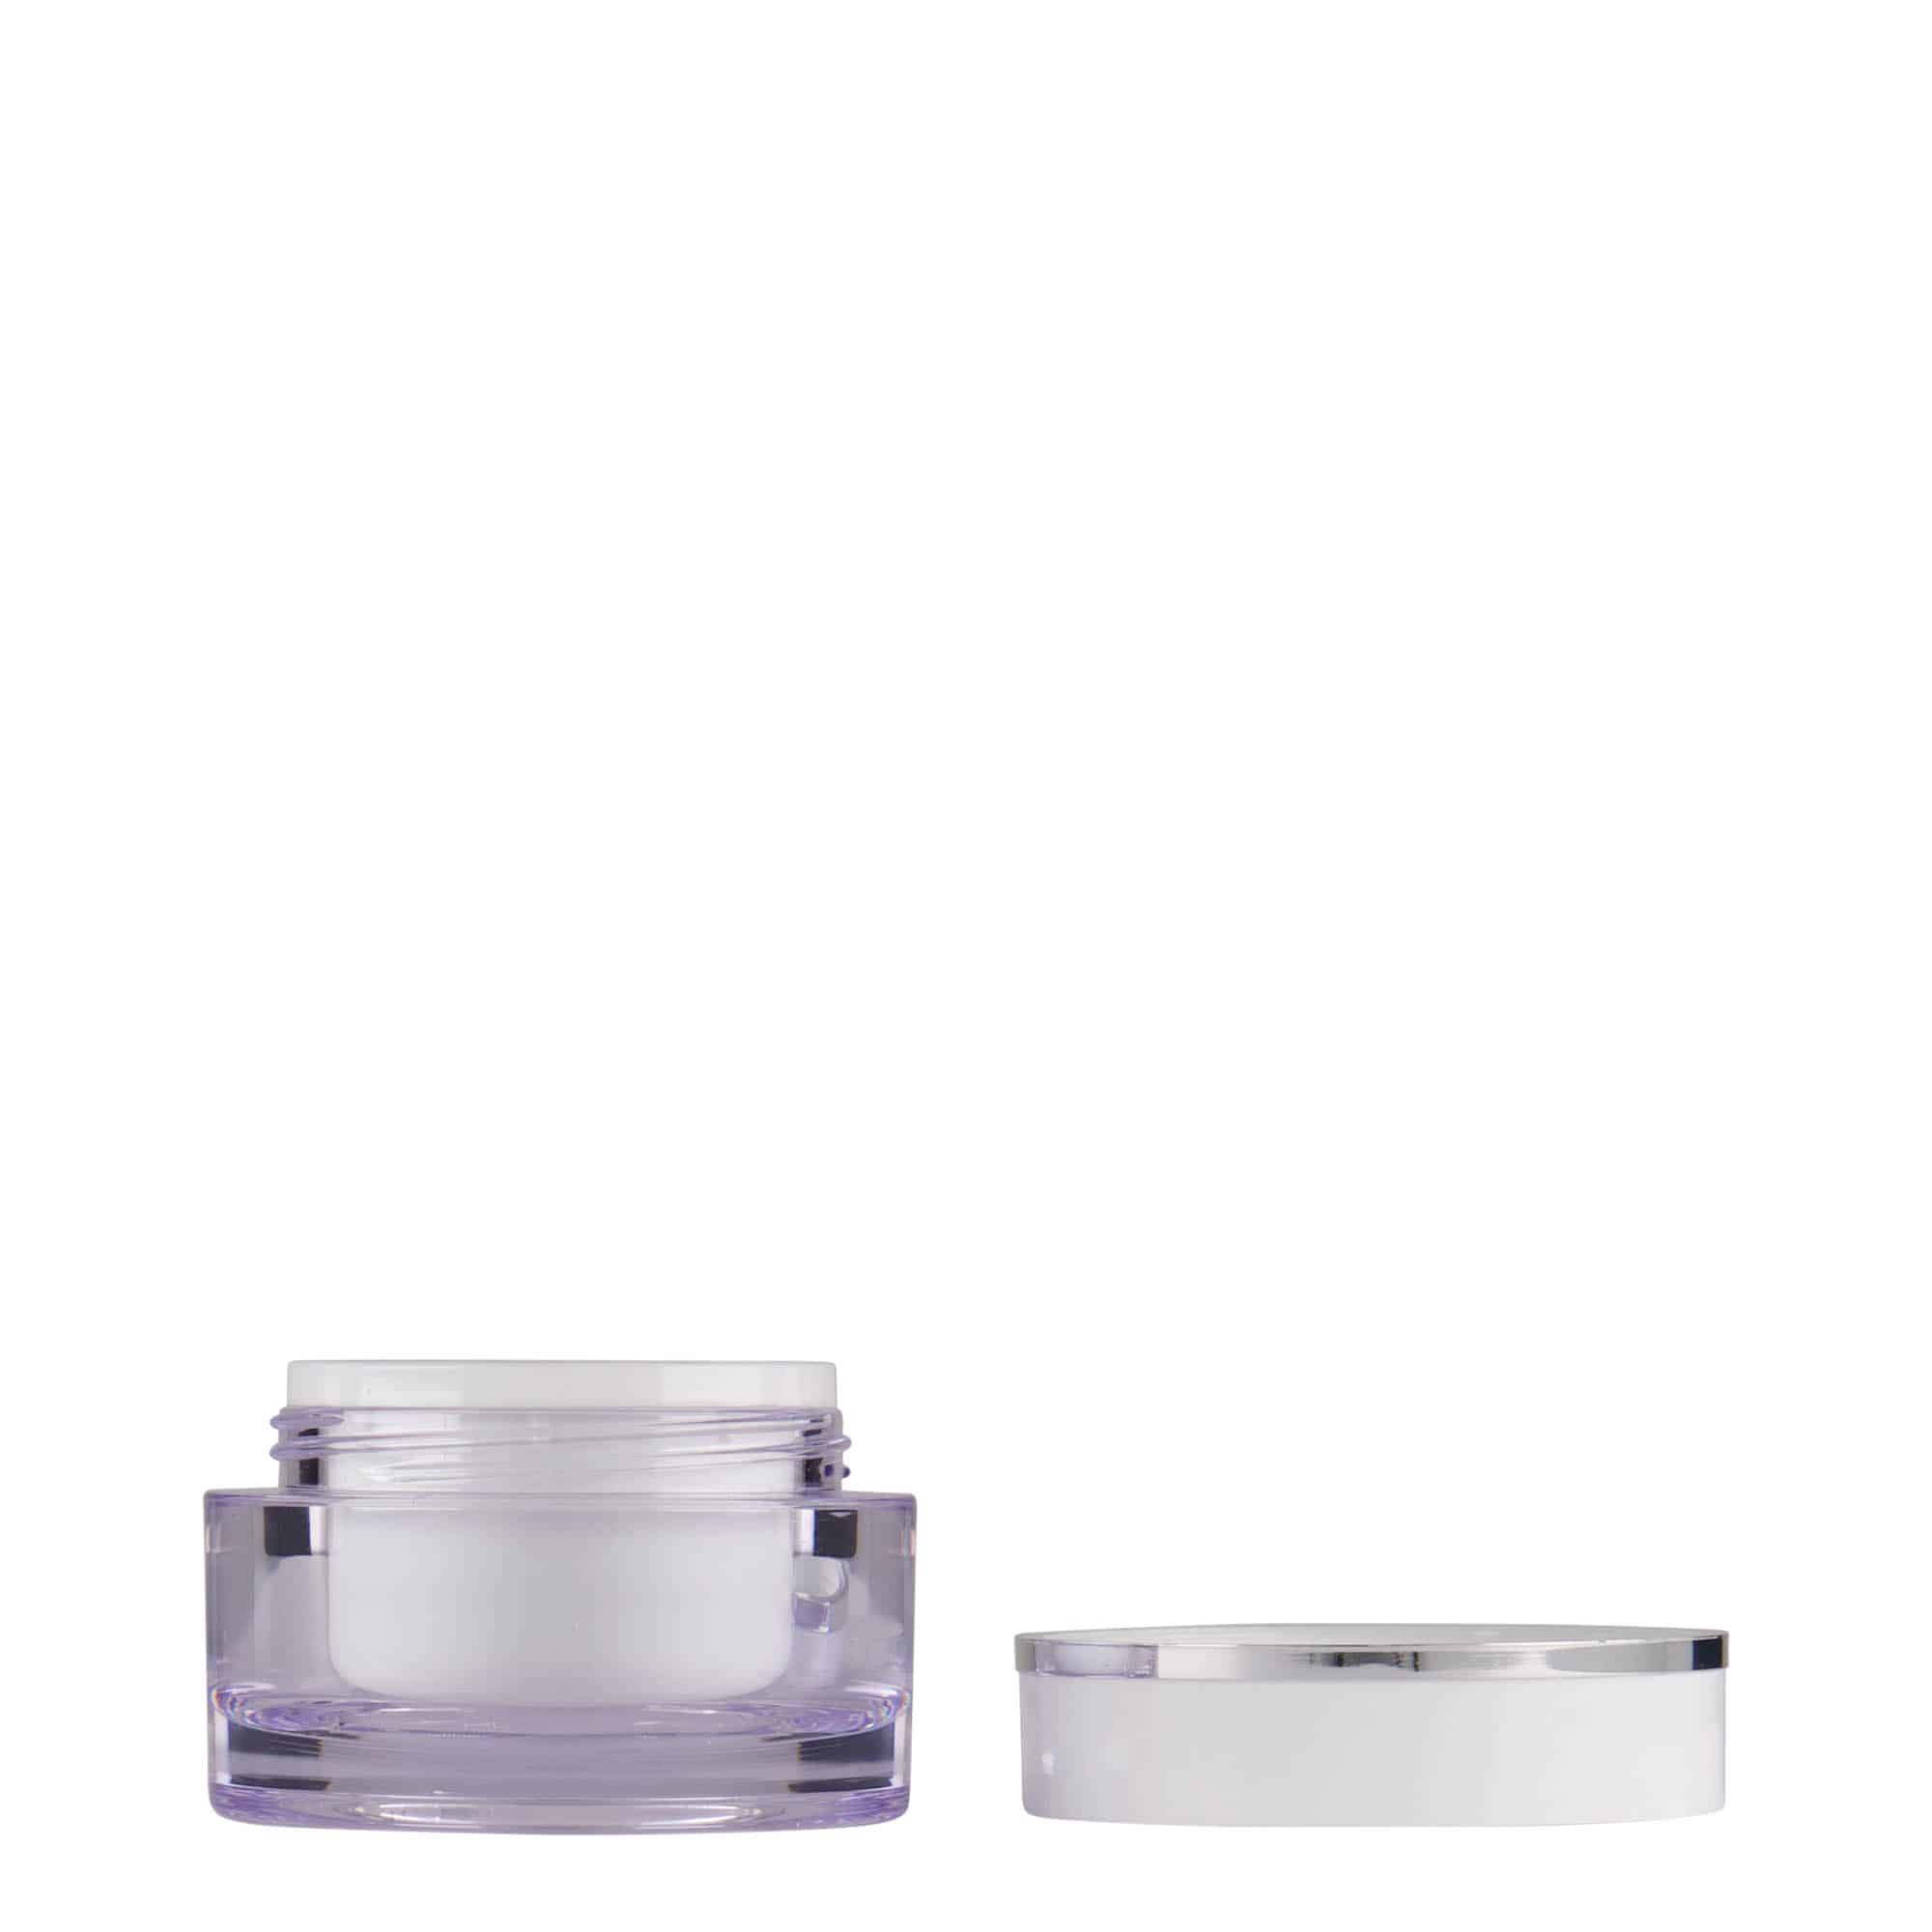 10 ml cosmetic jar, SAN plastic, white, closure: screw cap